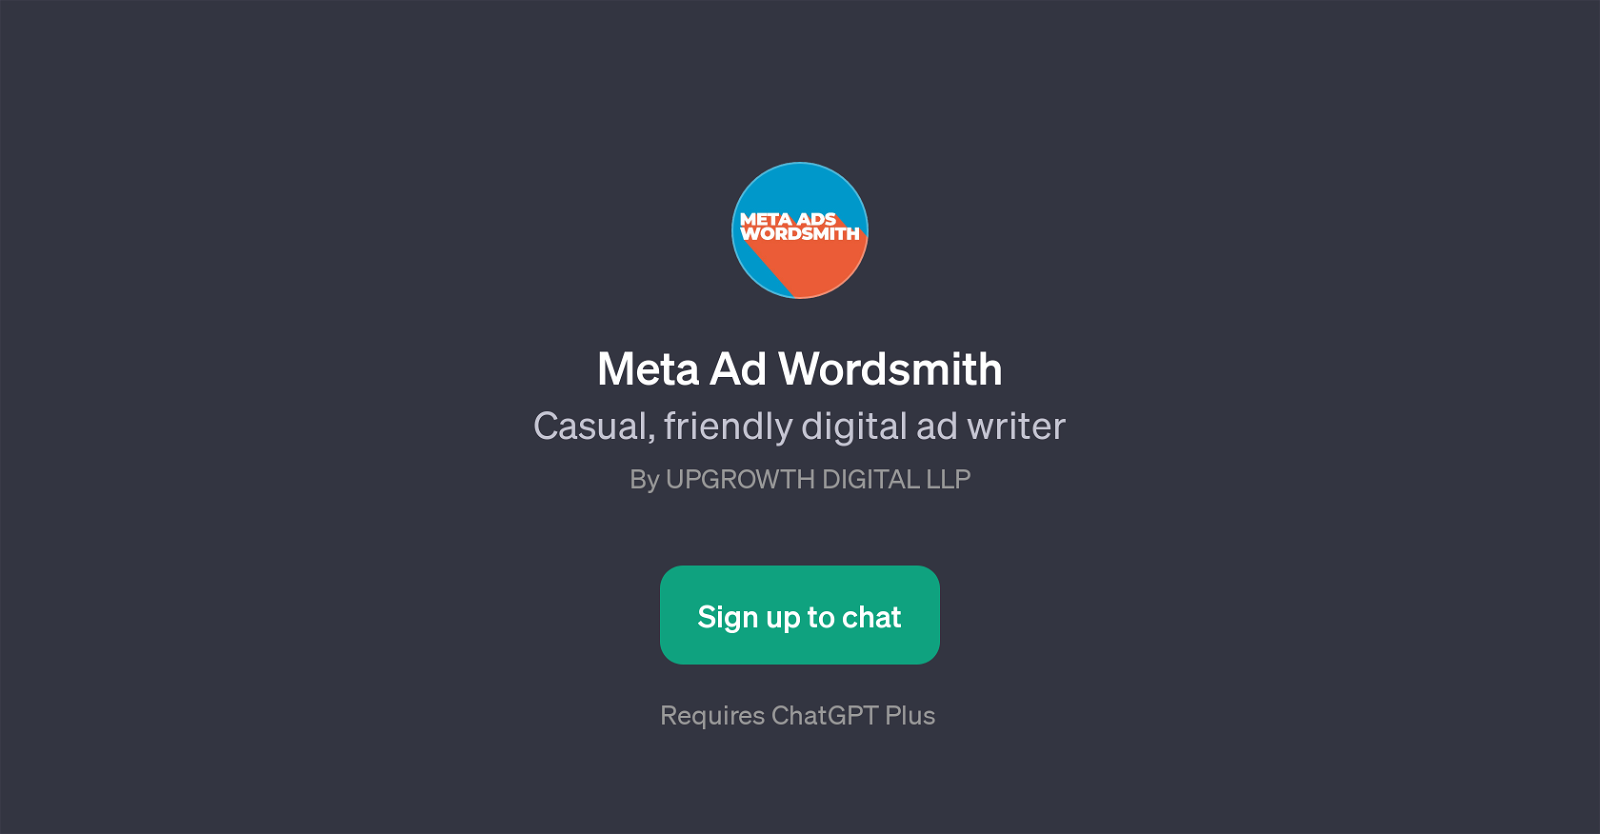 Meta Ad Wordsmith website